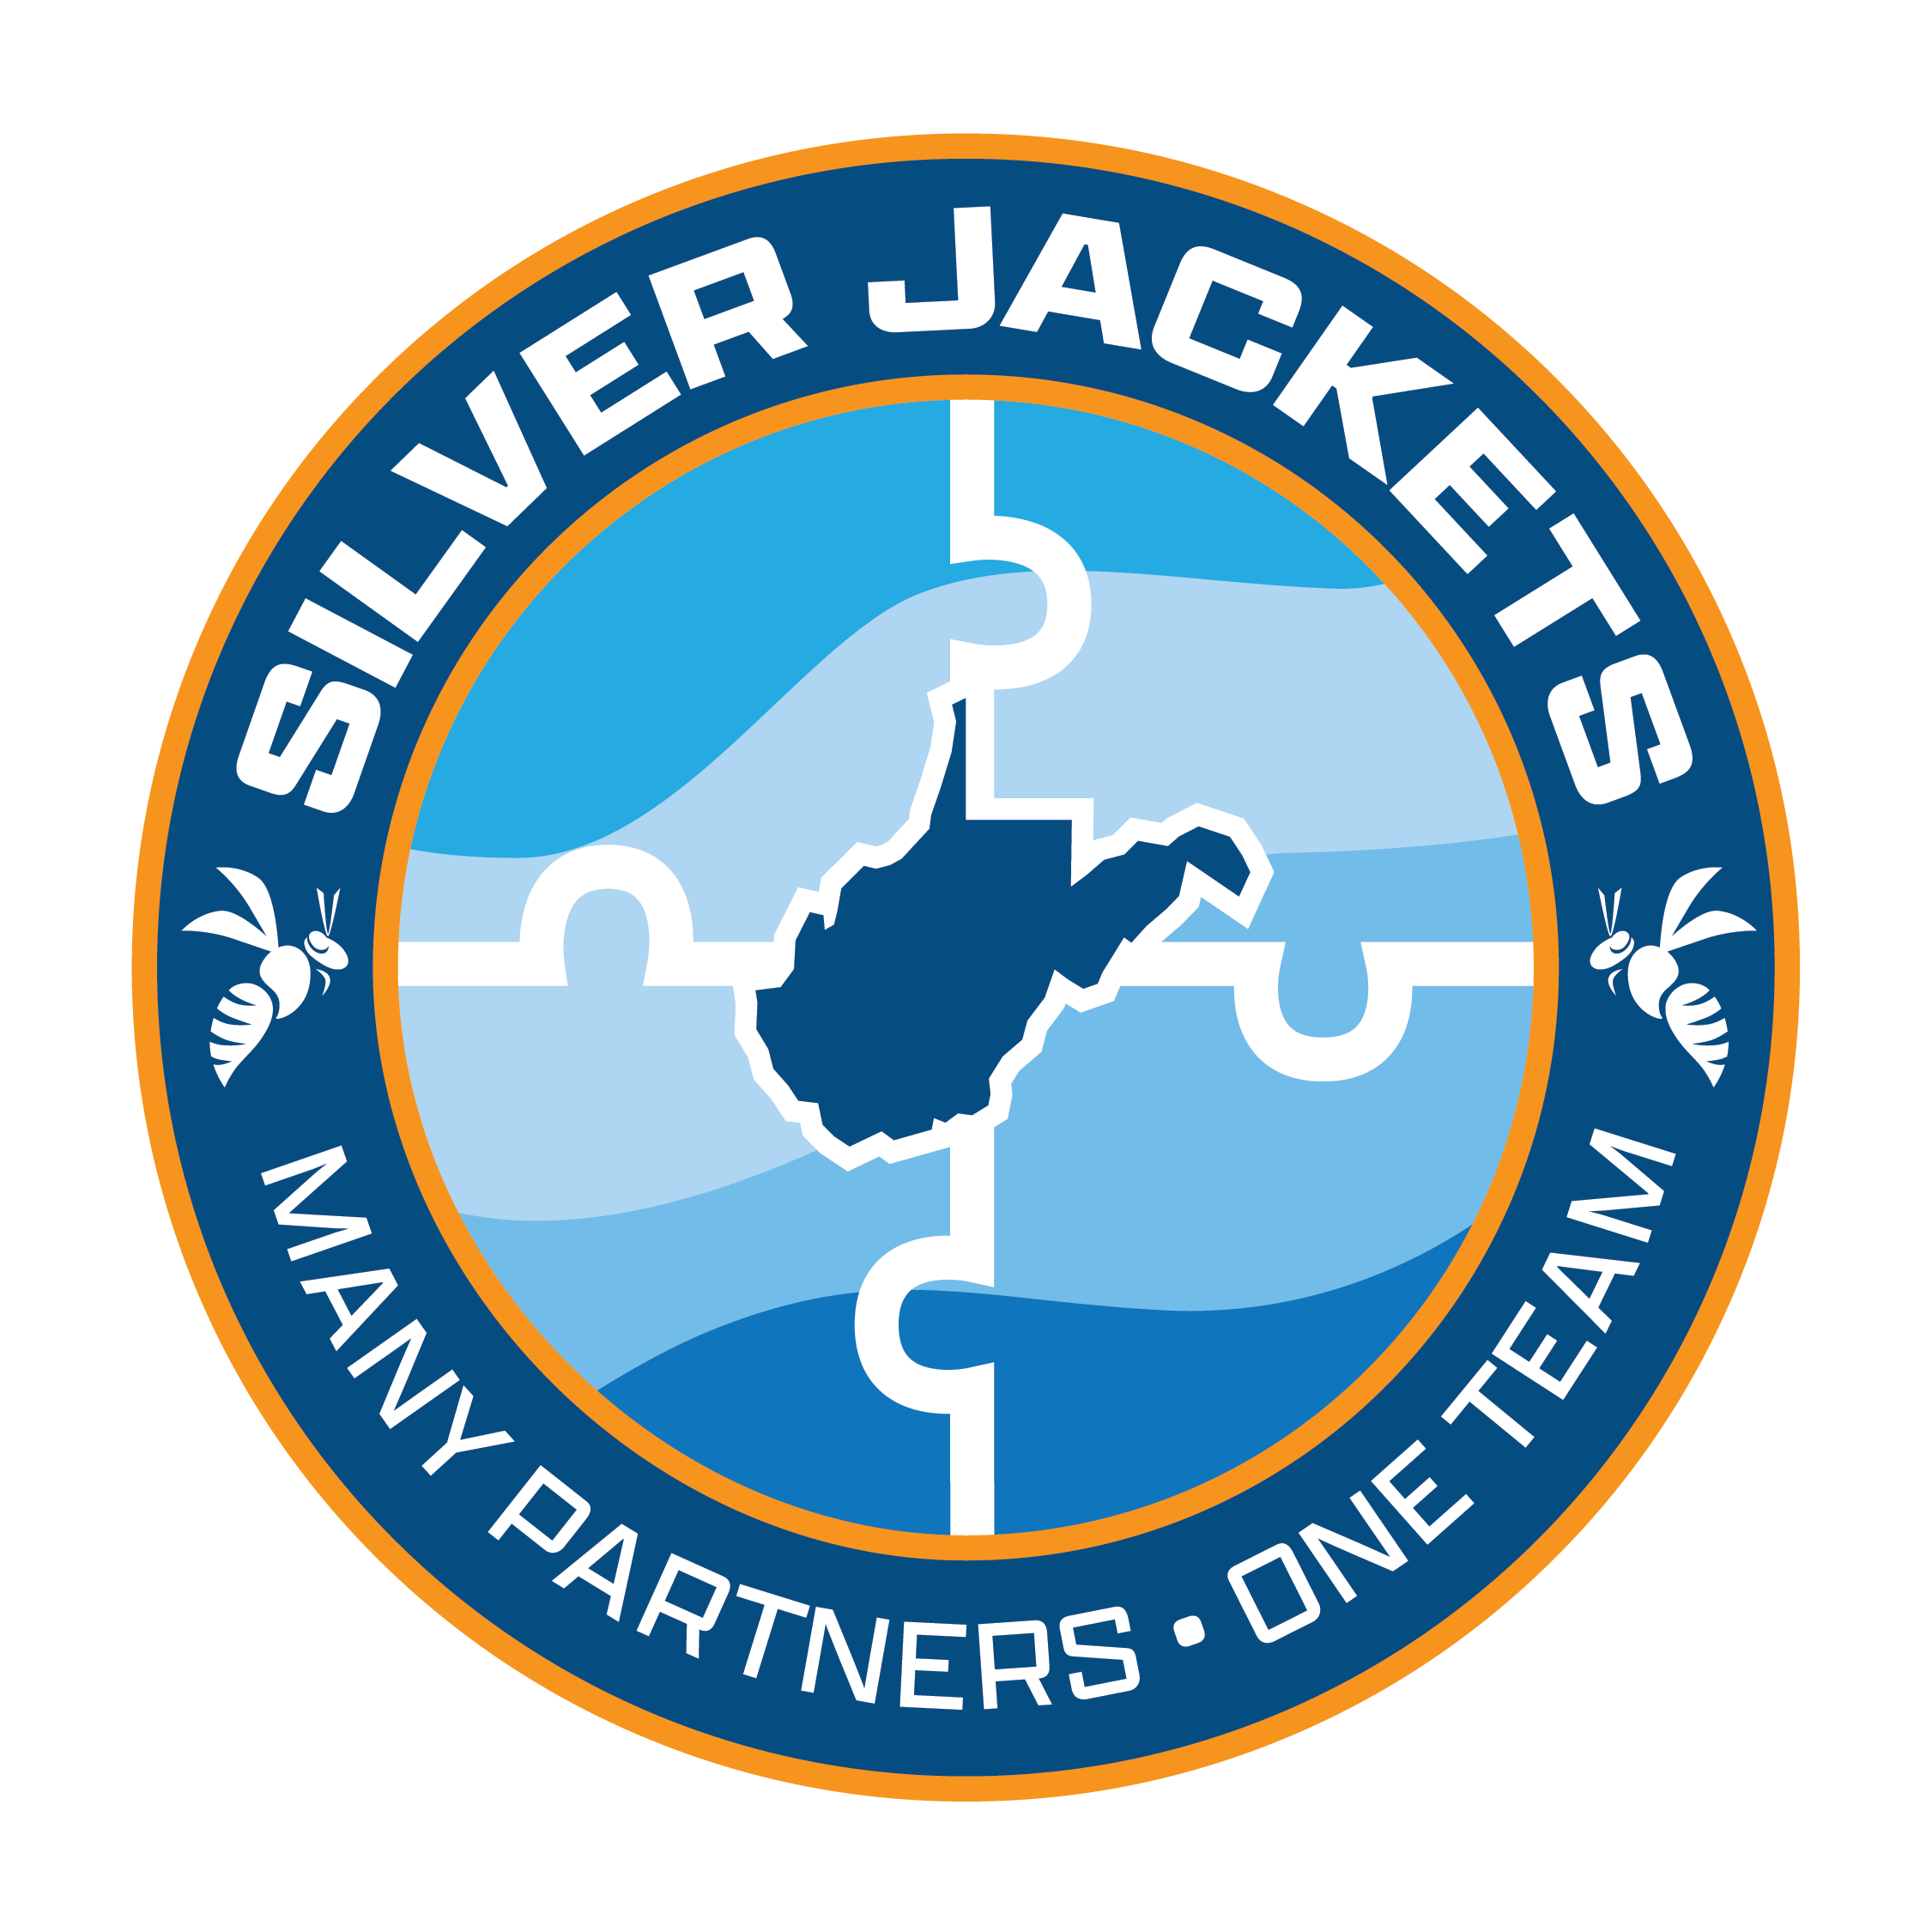 West Virginia Silver Jackets logo